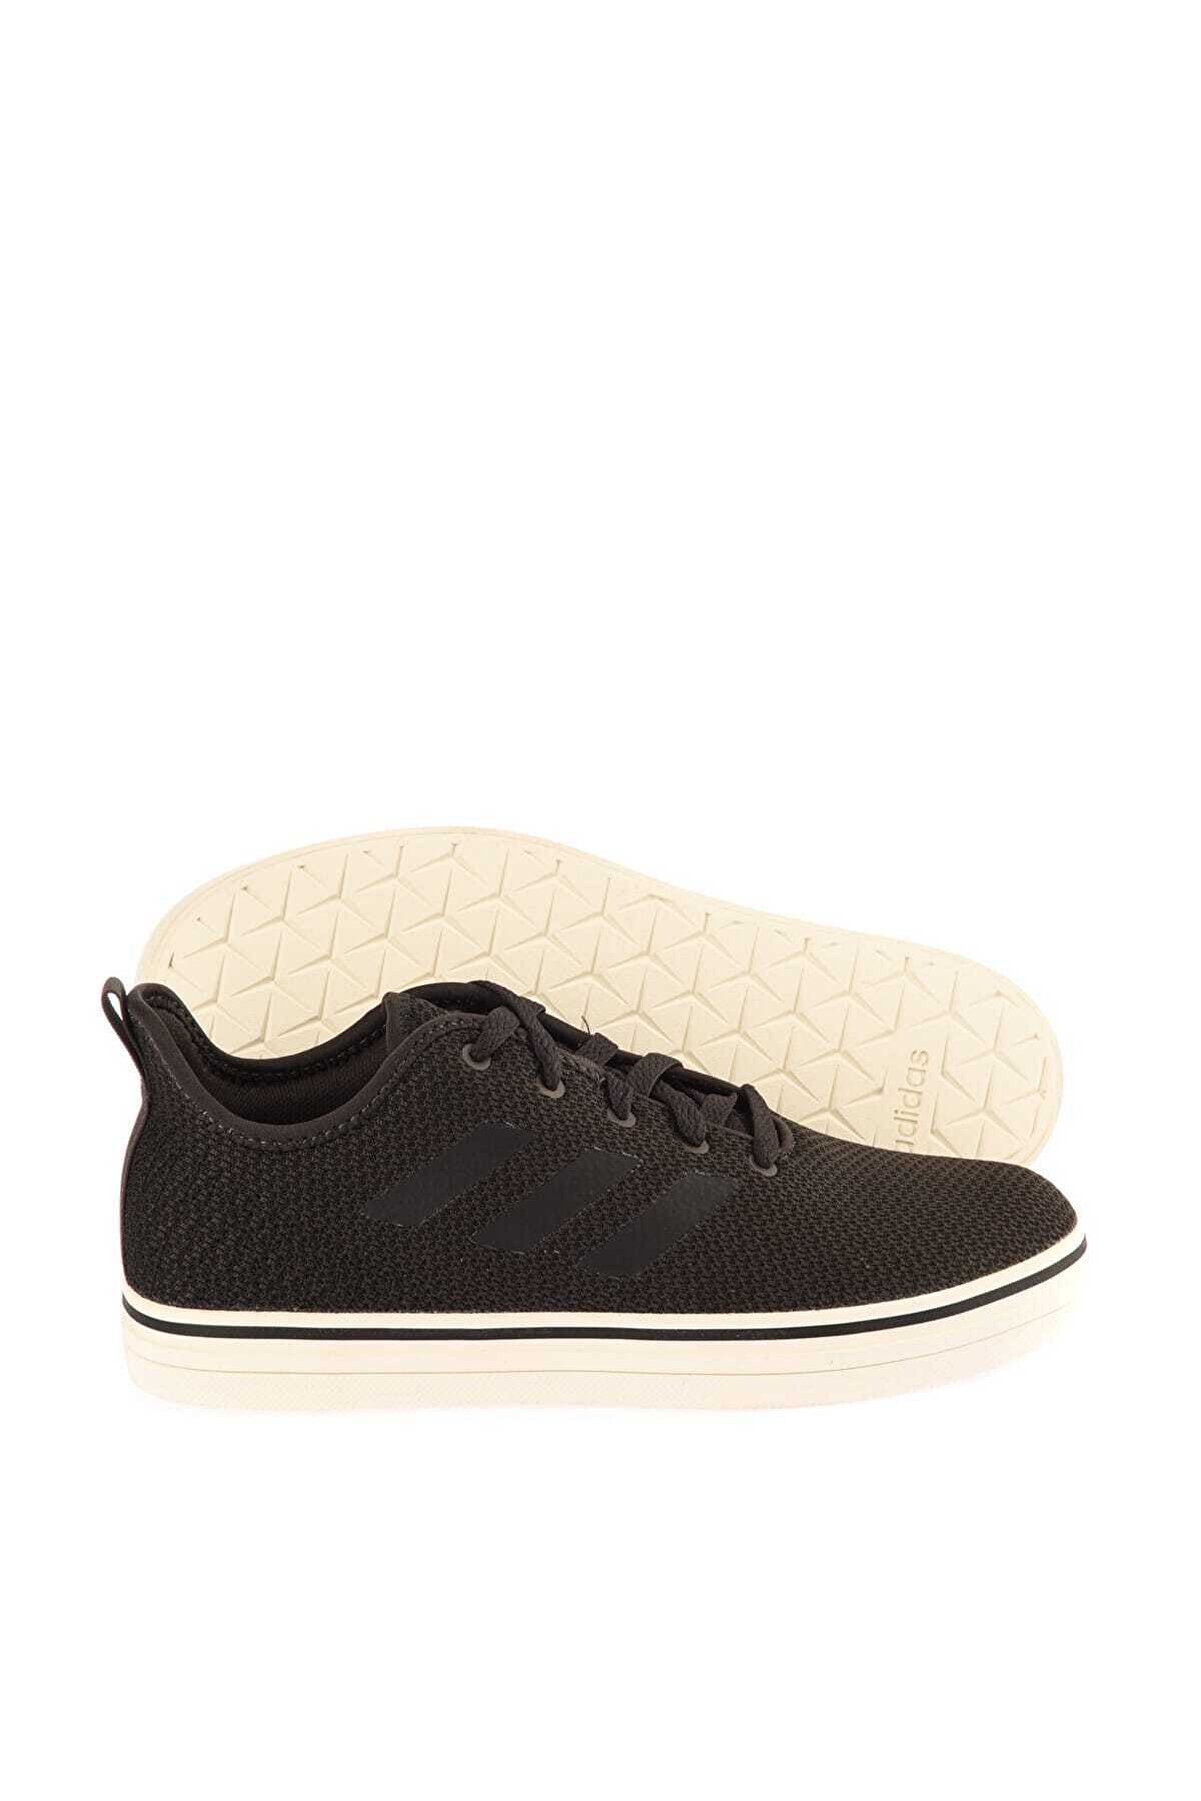 adidas True Chill Siyah Beyaz Erkek Sneaker Ayakkabı 100449138